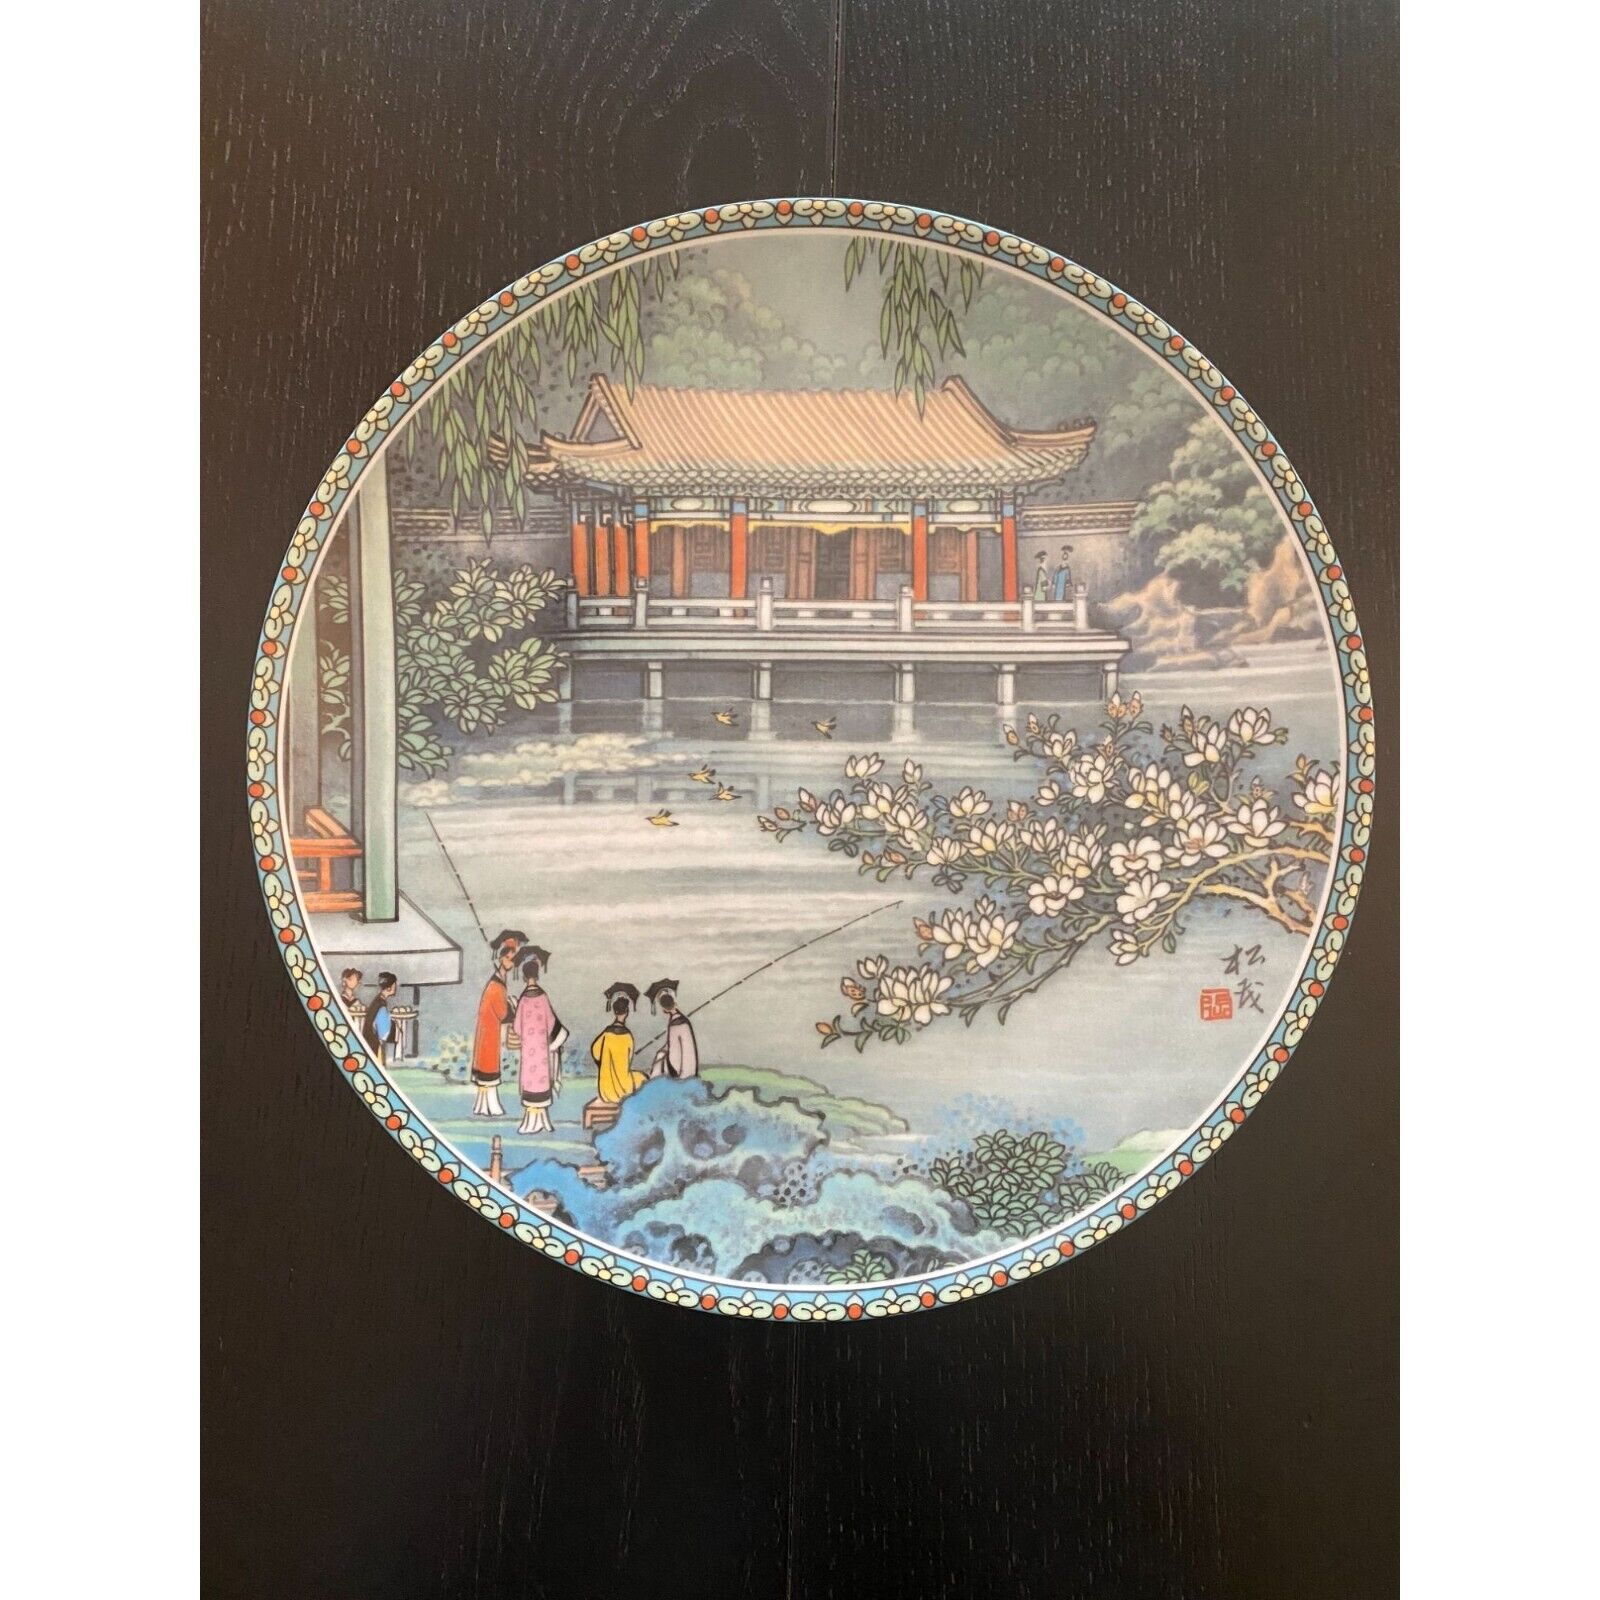 VTG Imperial Jingdezhen Porcelain Plate “Garden of Harmonious Pleasure“ 1989